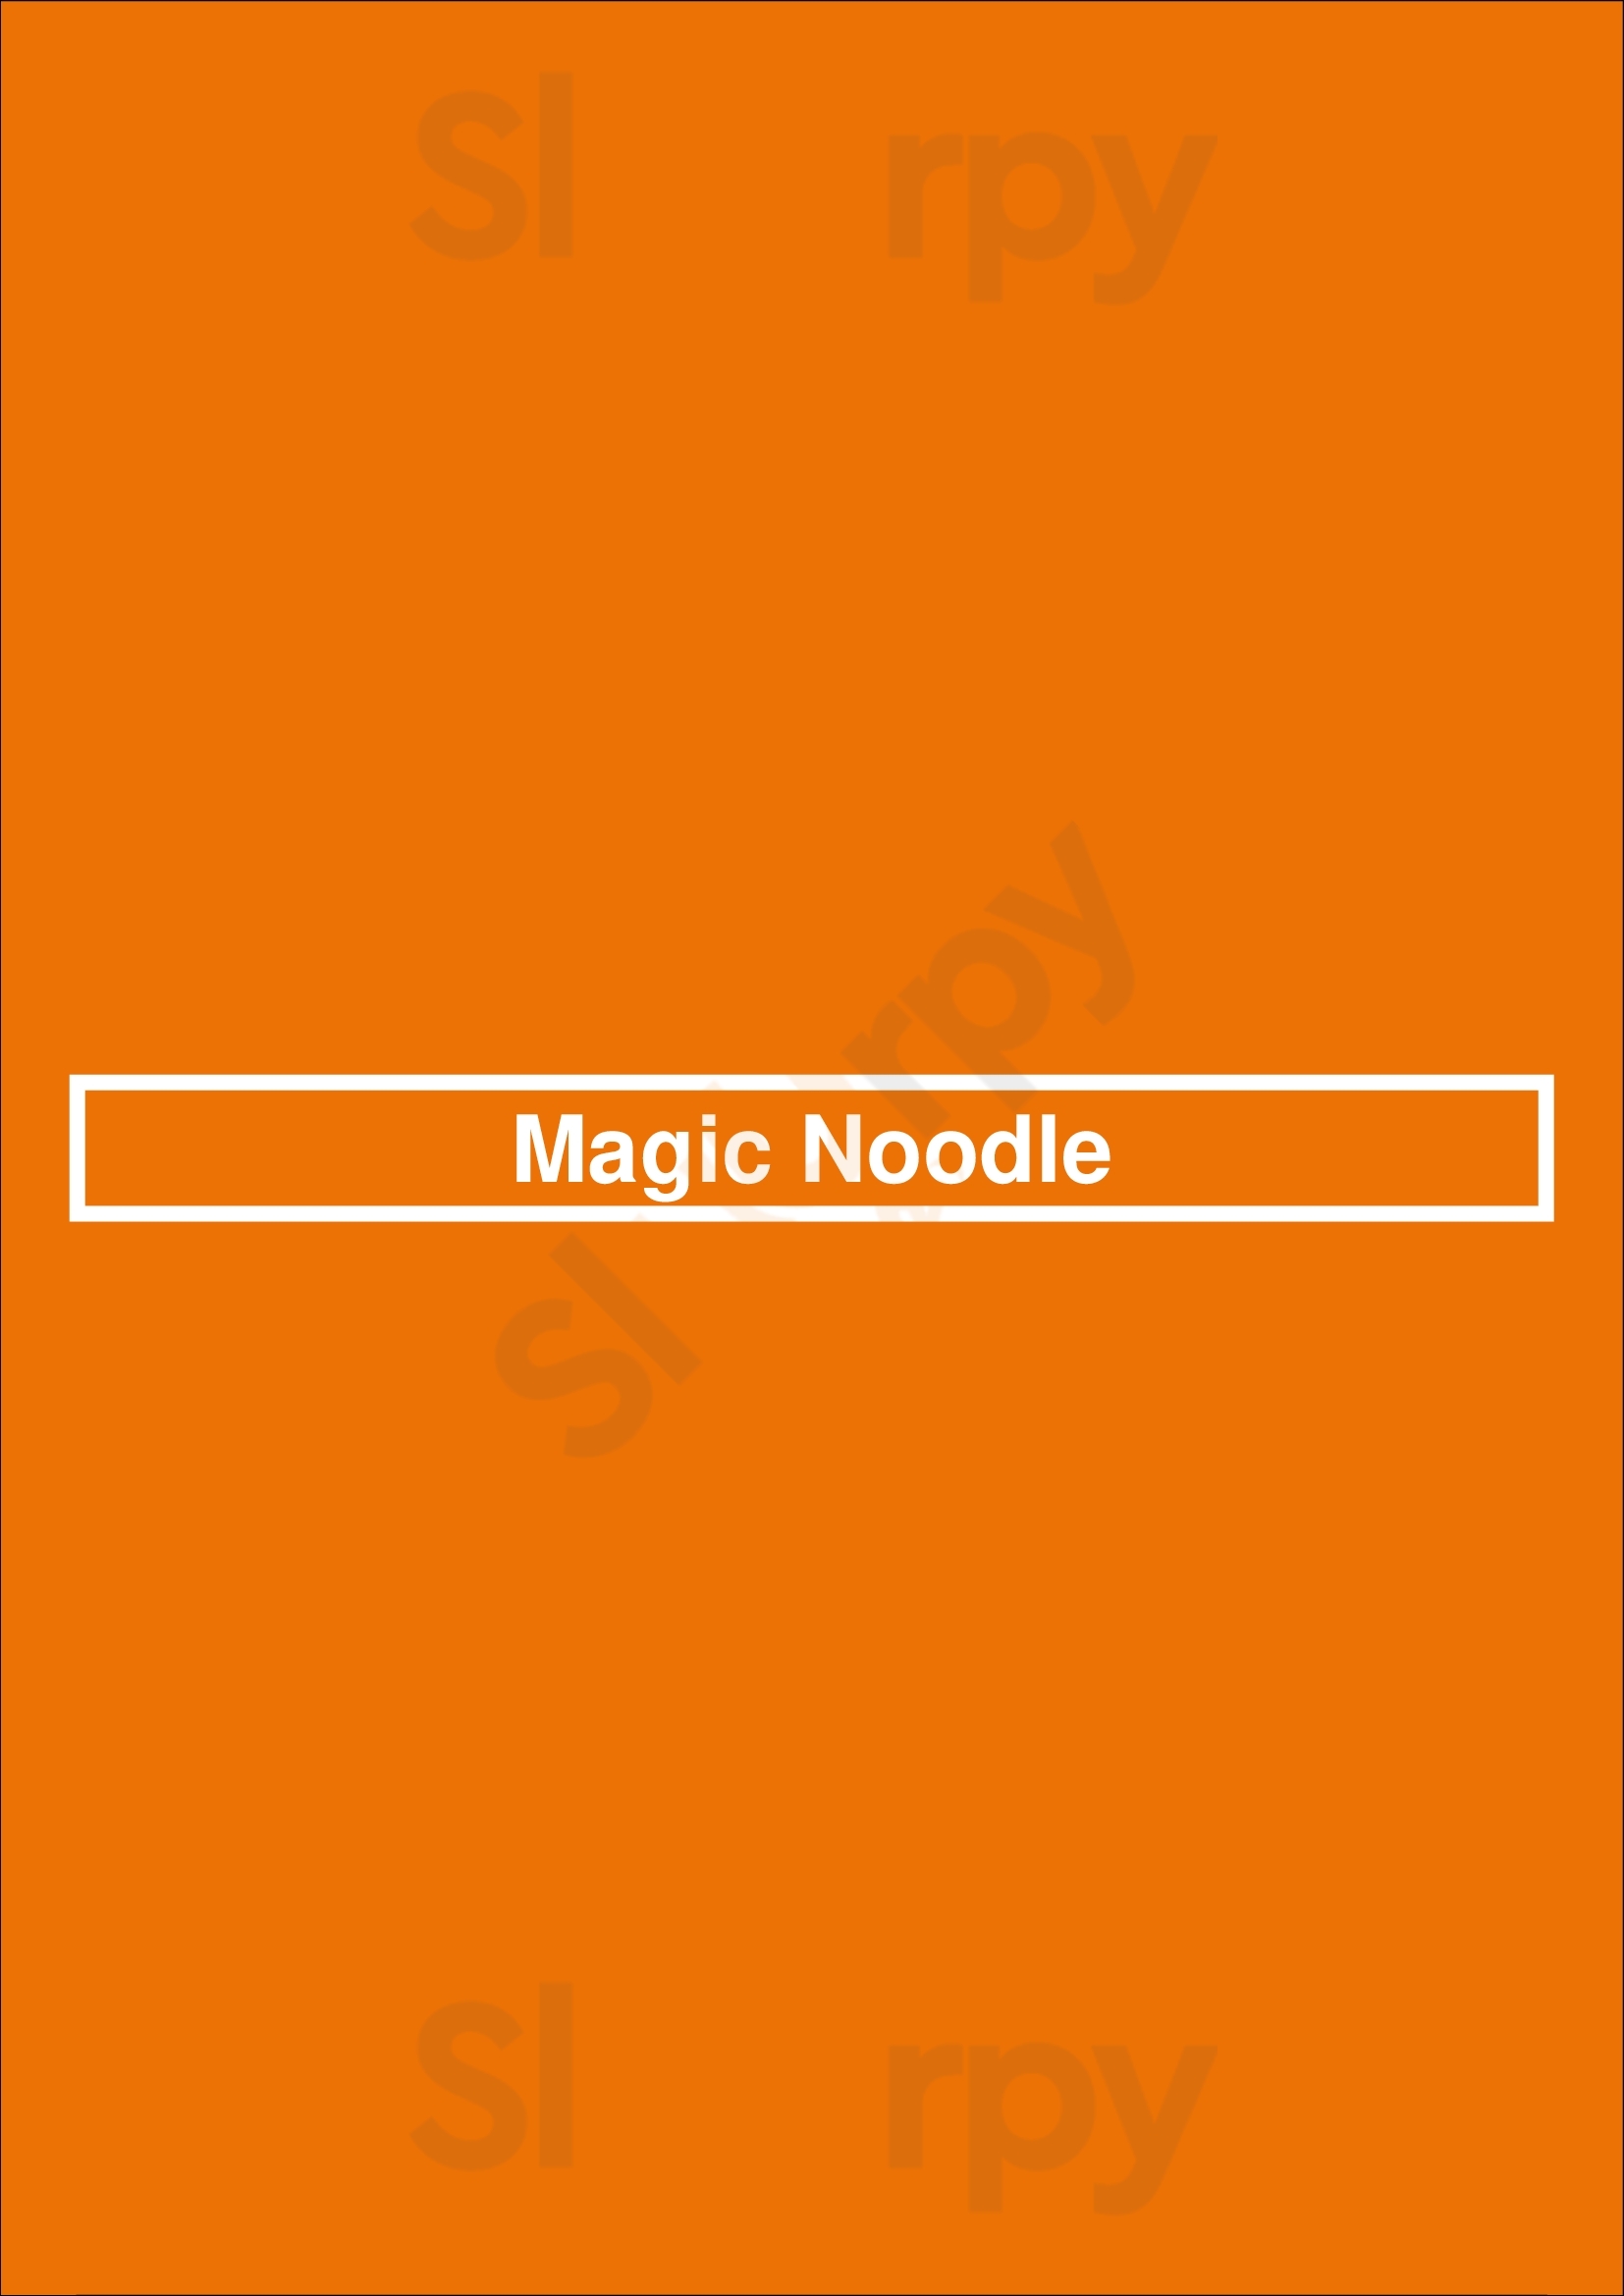 Magic Noodle Richmond Hill Menu - 1